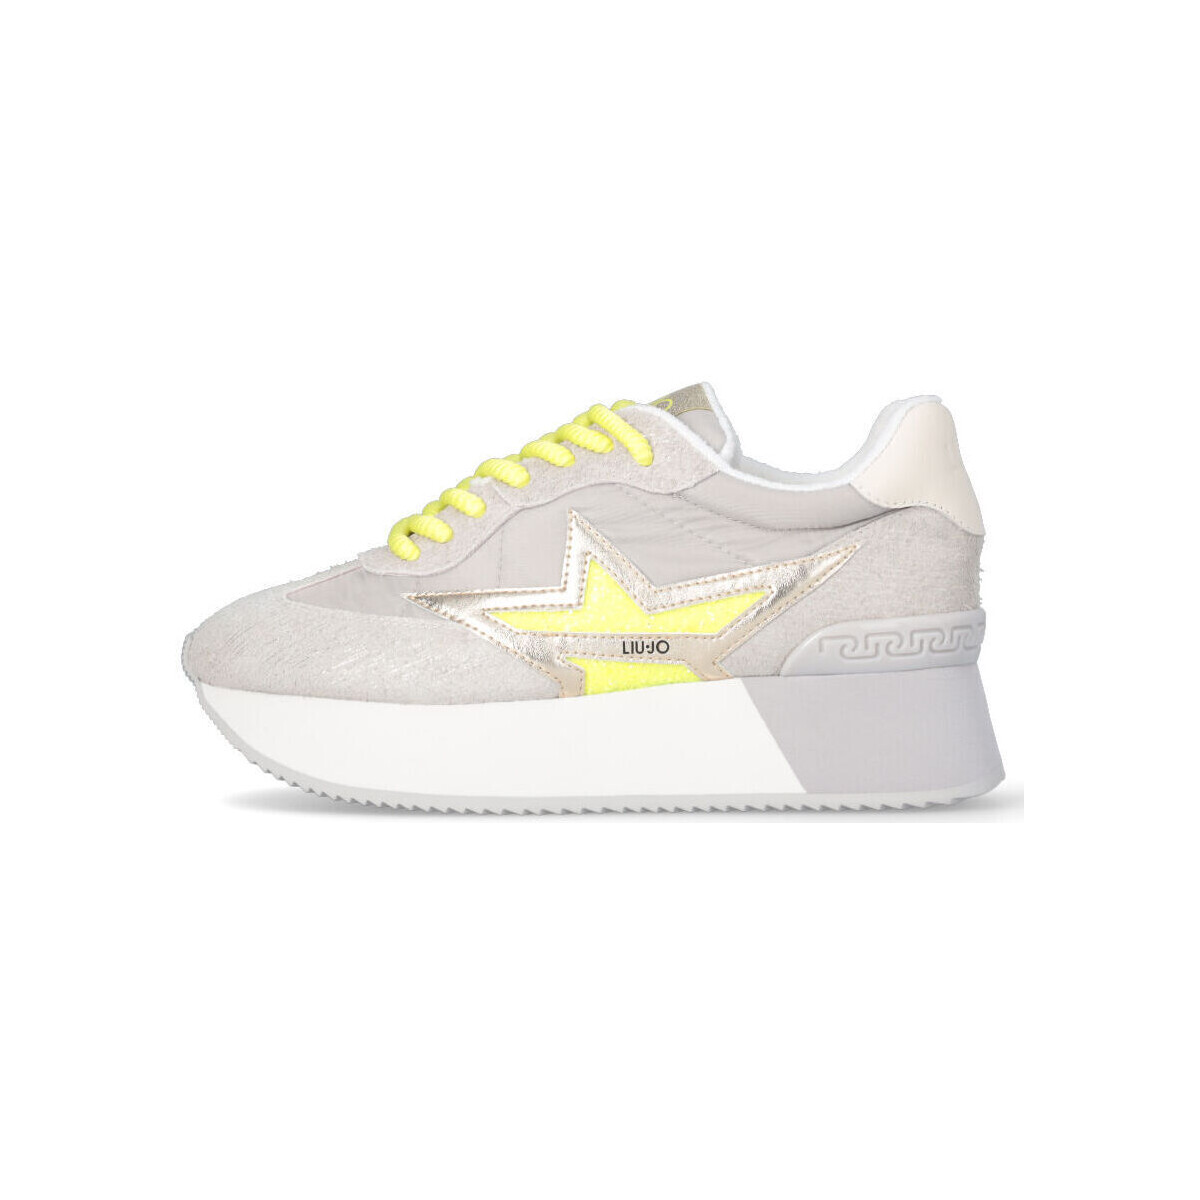 Liu Jo Gris Sneakers plateforme avec étoile glitter o6T